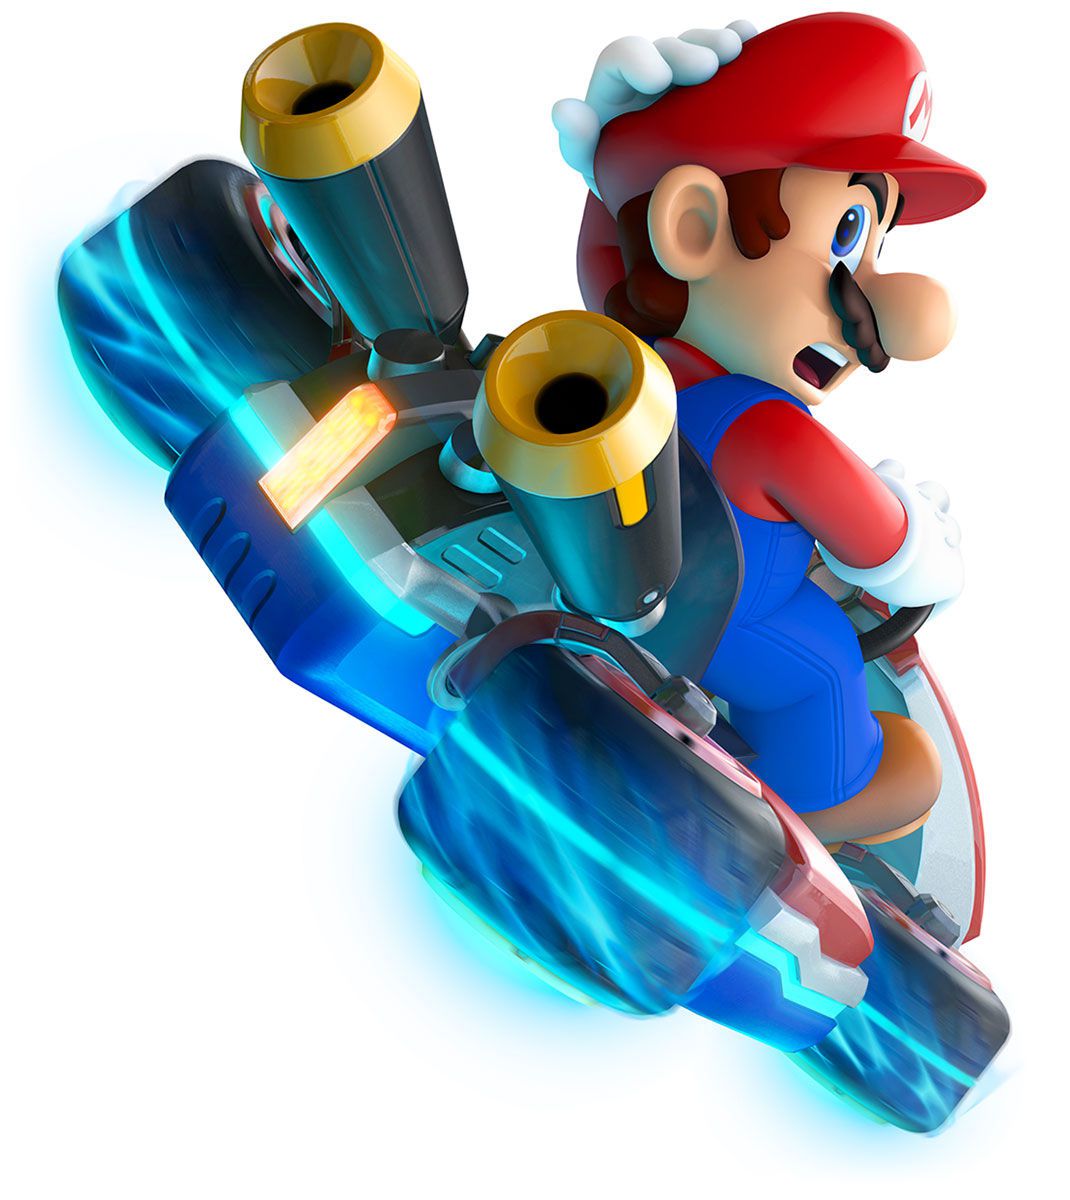 8 Mario Kart images 2